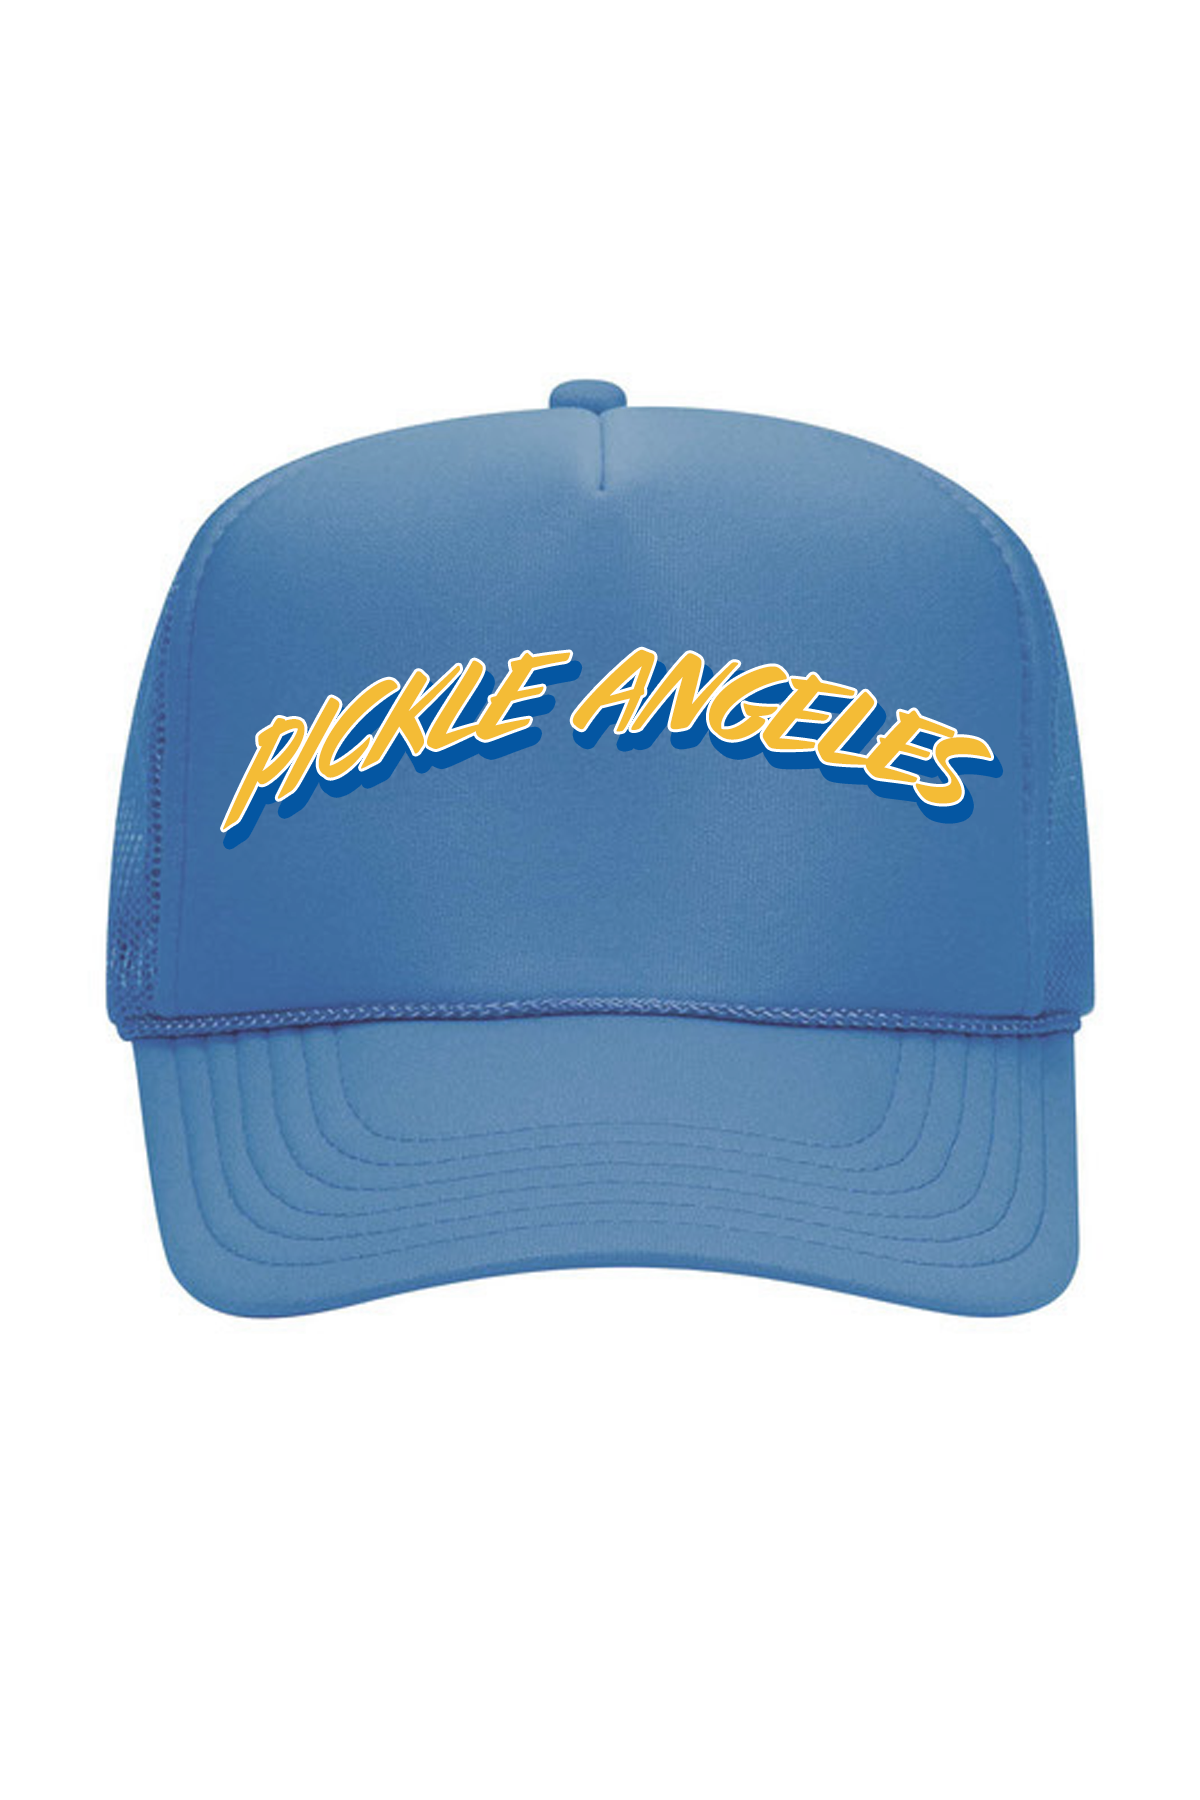 Pickle Angeles Trucker Hats